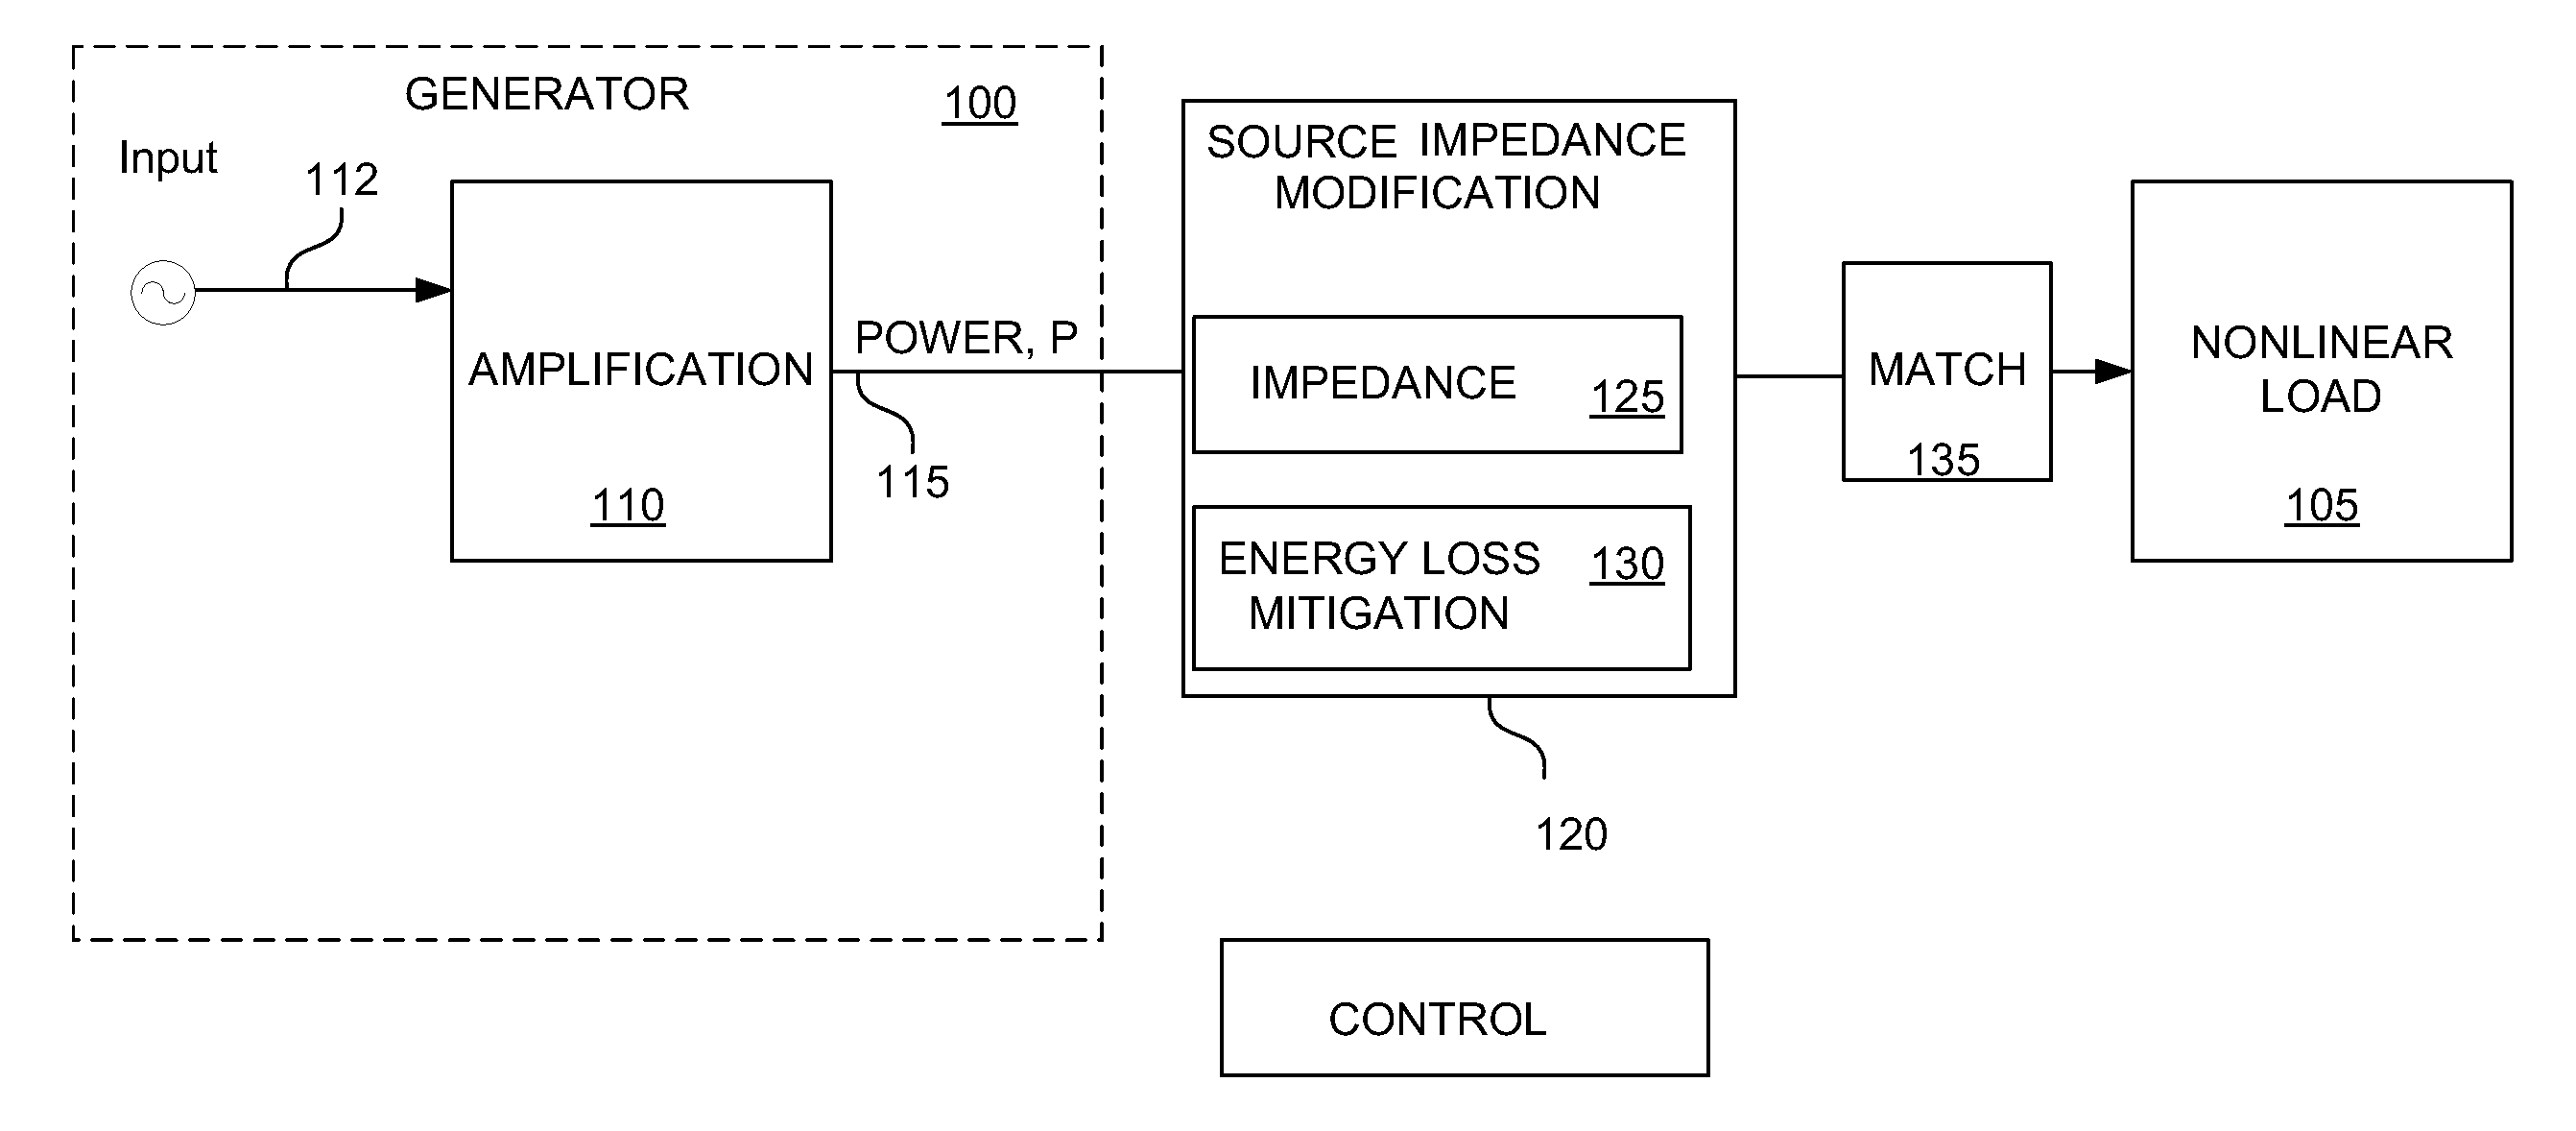 Efficient active source impedance modification of a power amplifier